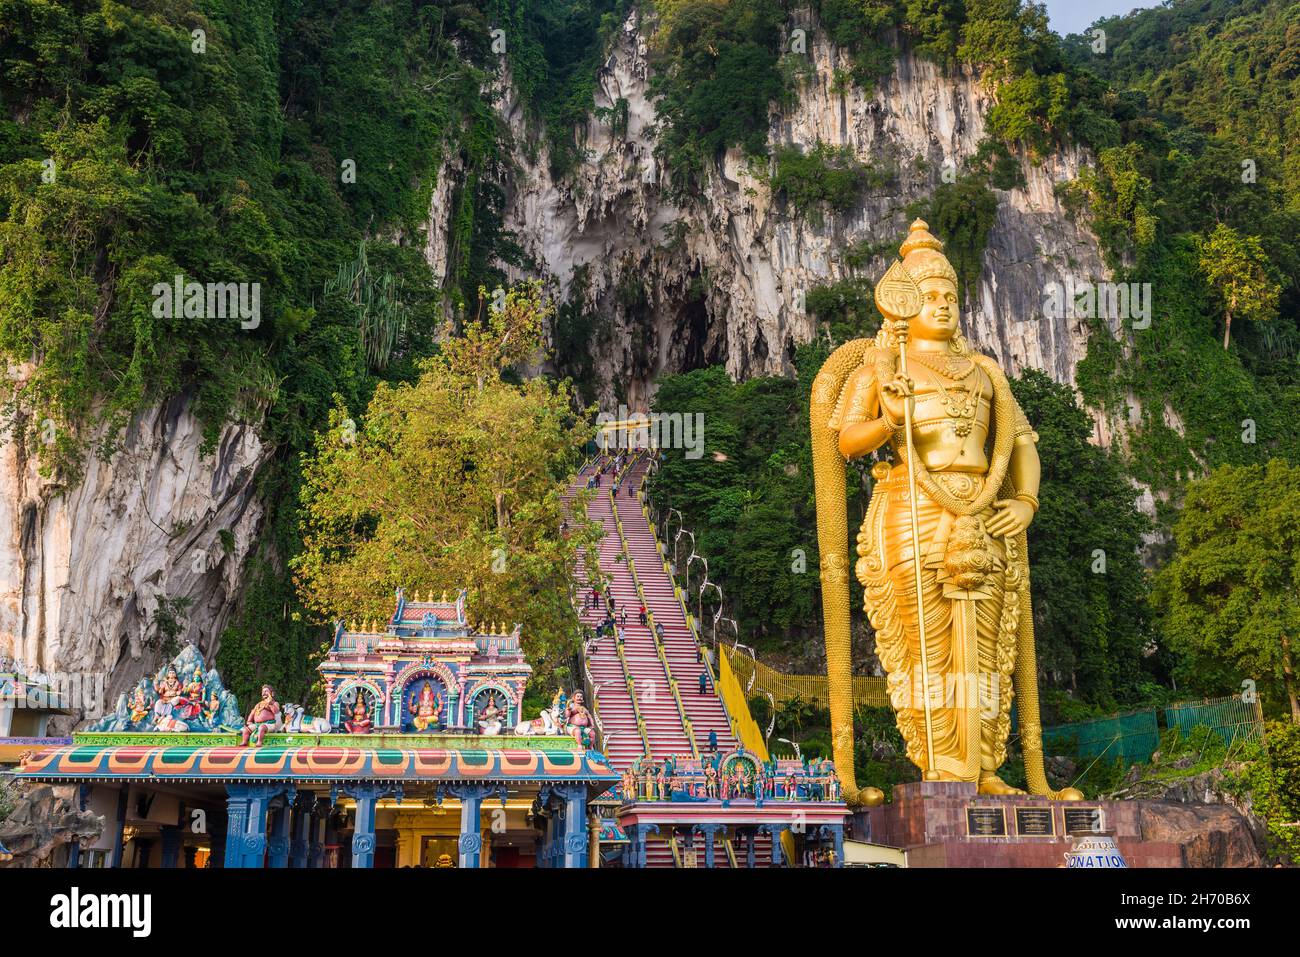 Selangor, Malaysia, 09 Aug 2015: Statue of Murugan the Hindu God of war and victory at Batu Caves. Stock Photo